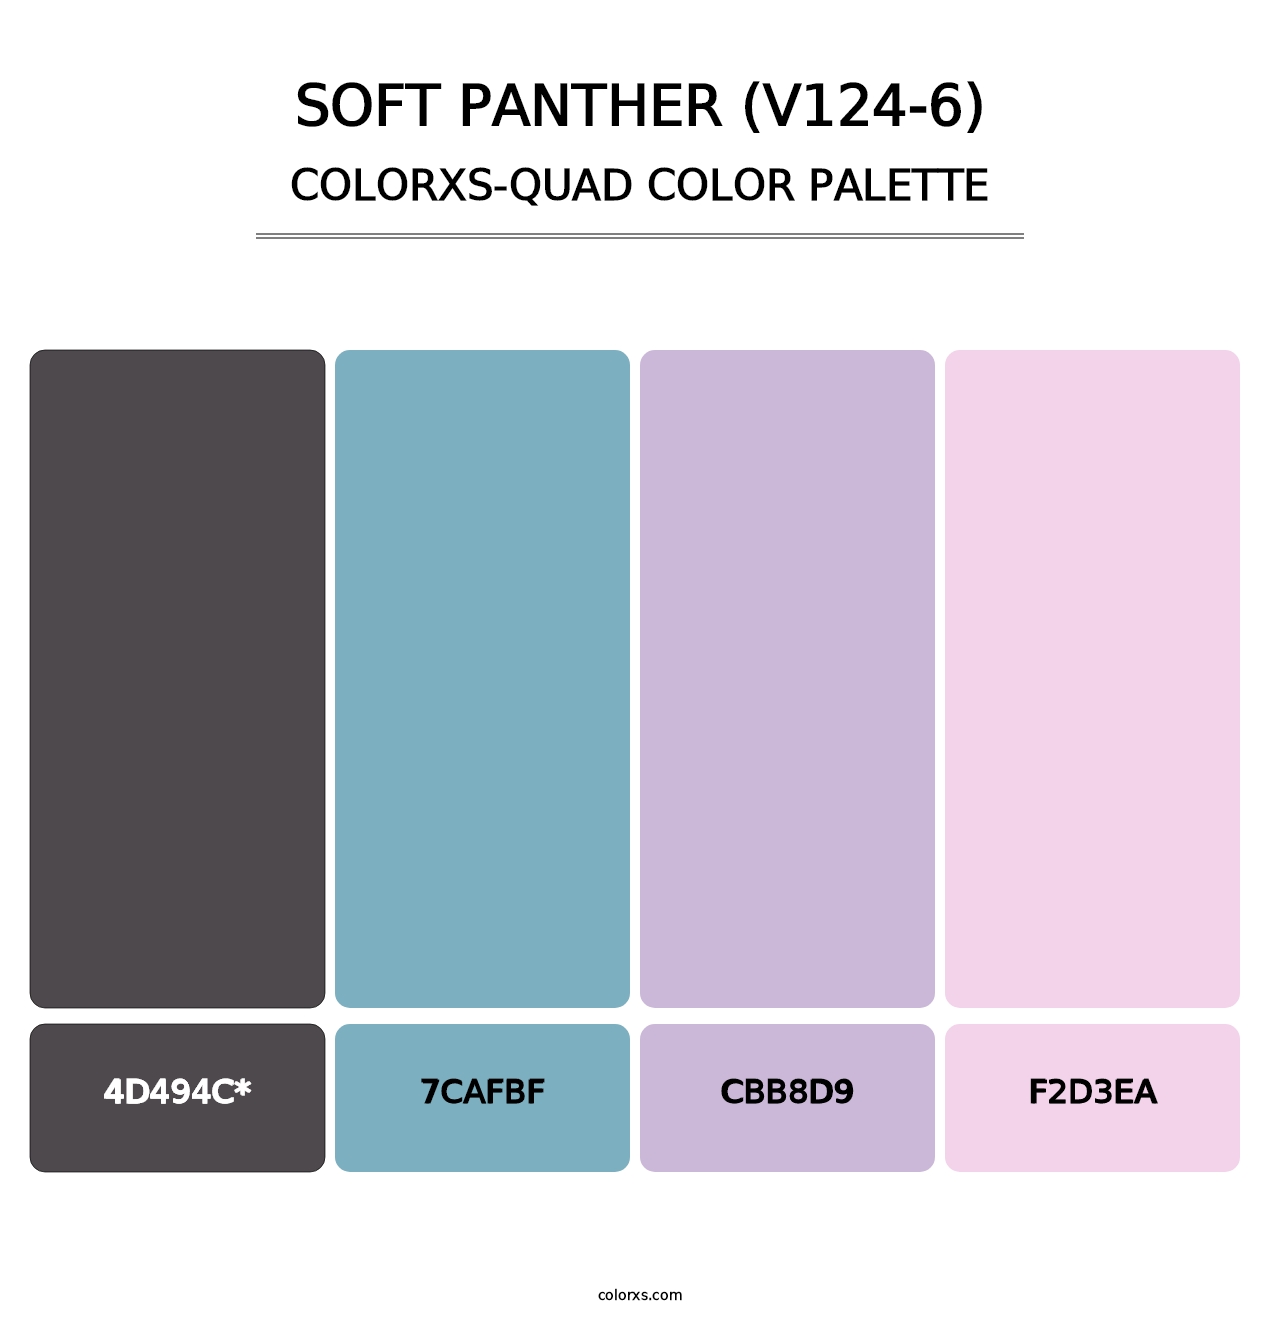 Soft Panther (V124-6) - Colorxs Quad Palette